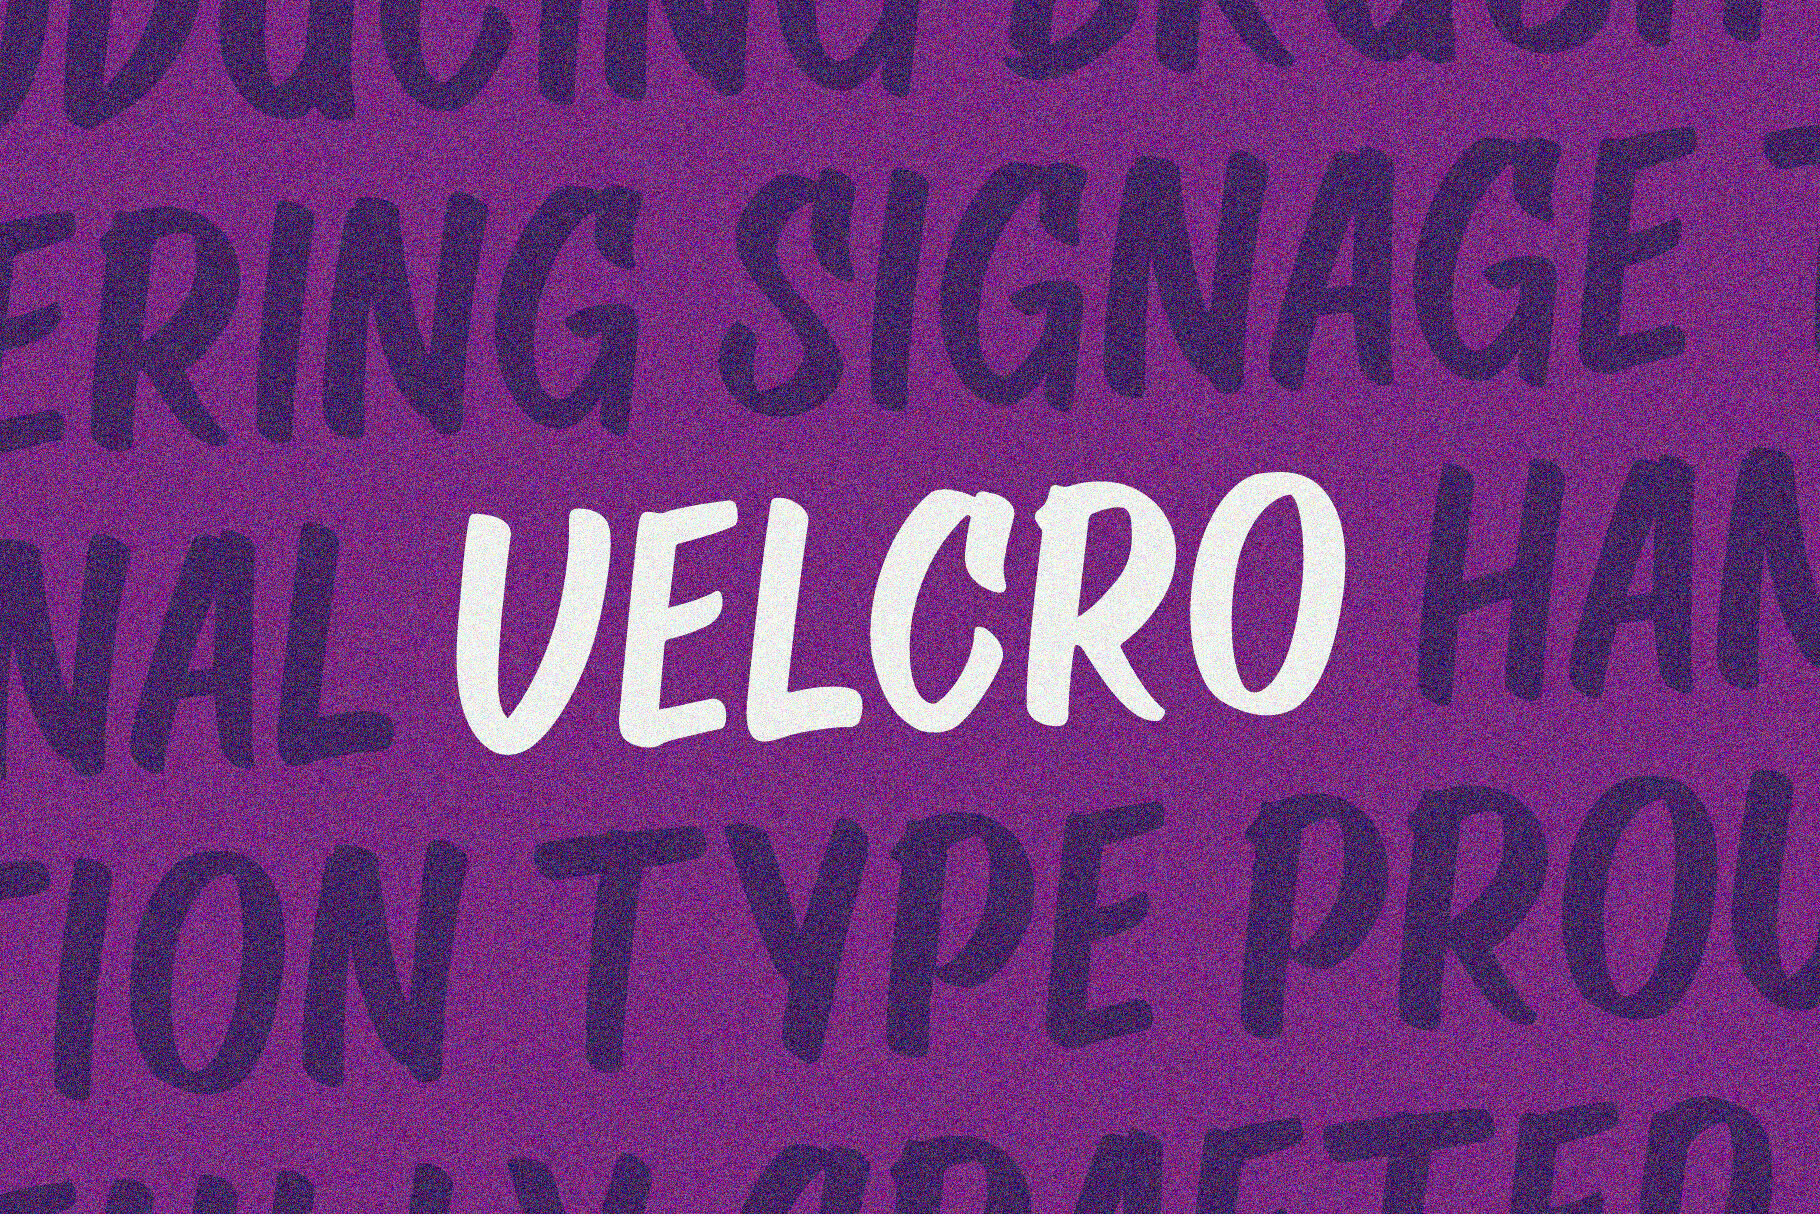 Velcro By Viaction Type Co Thehungryjpeg Com